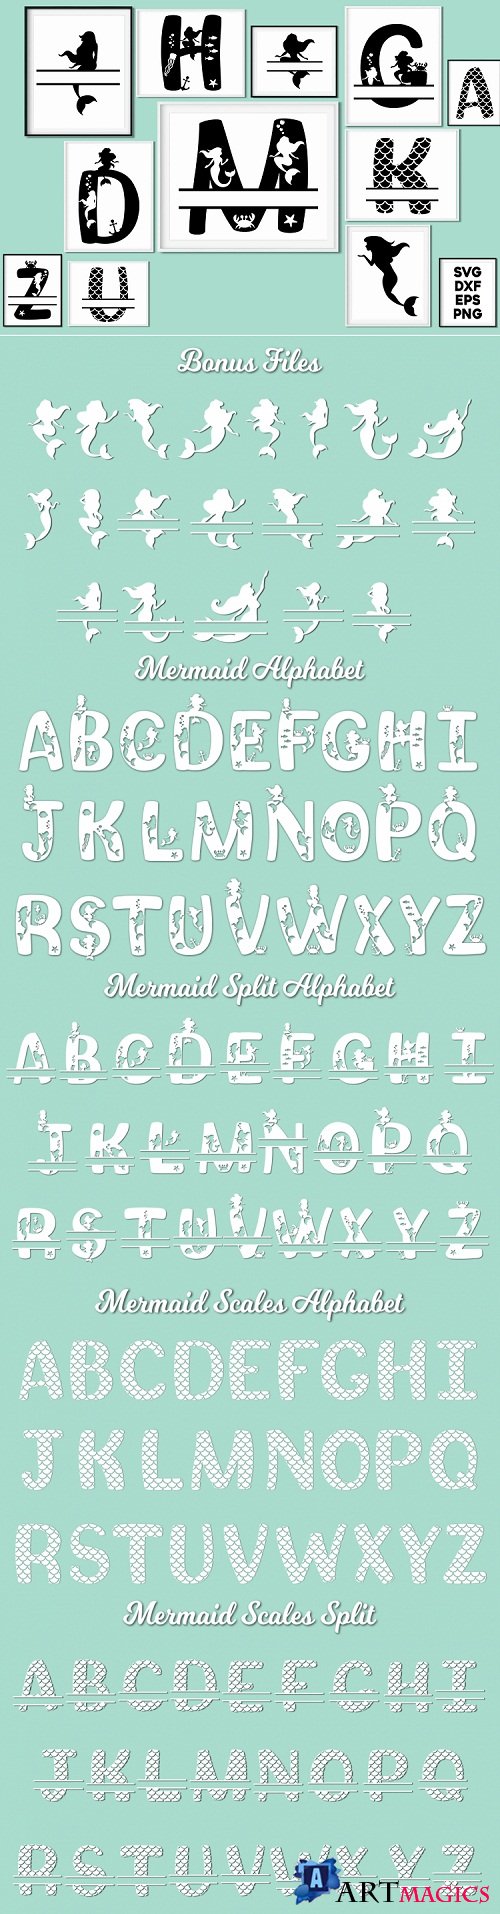 Mermaid Alphabet and Split Letters SVG - 220645